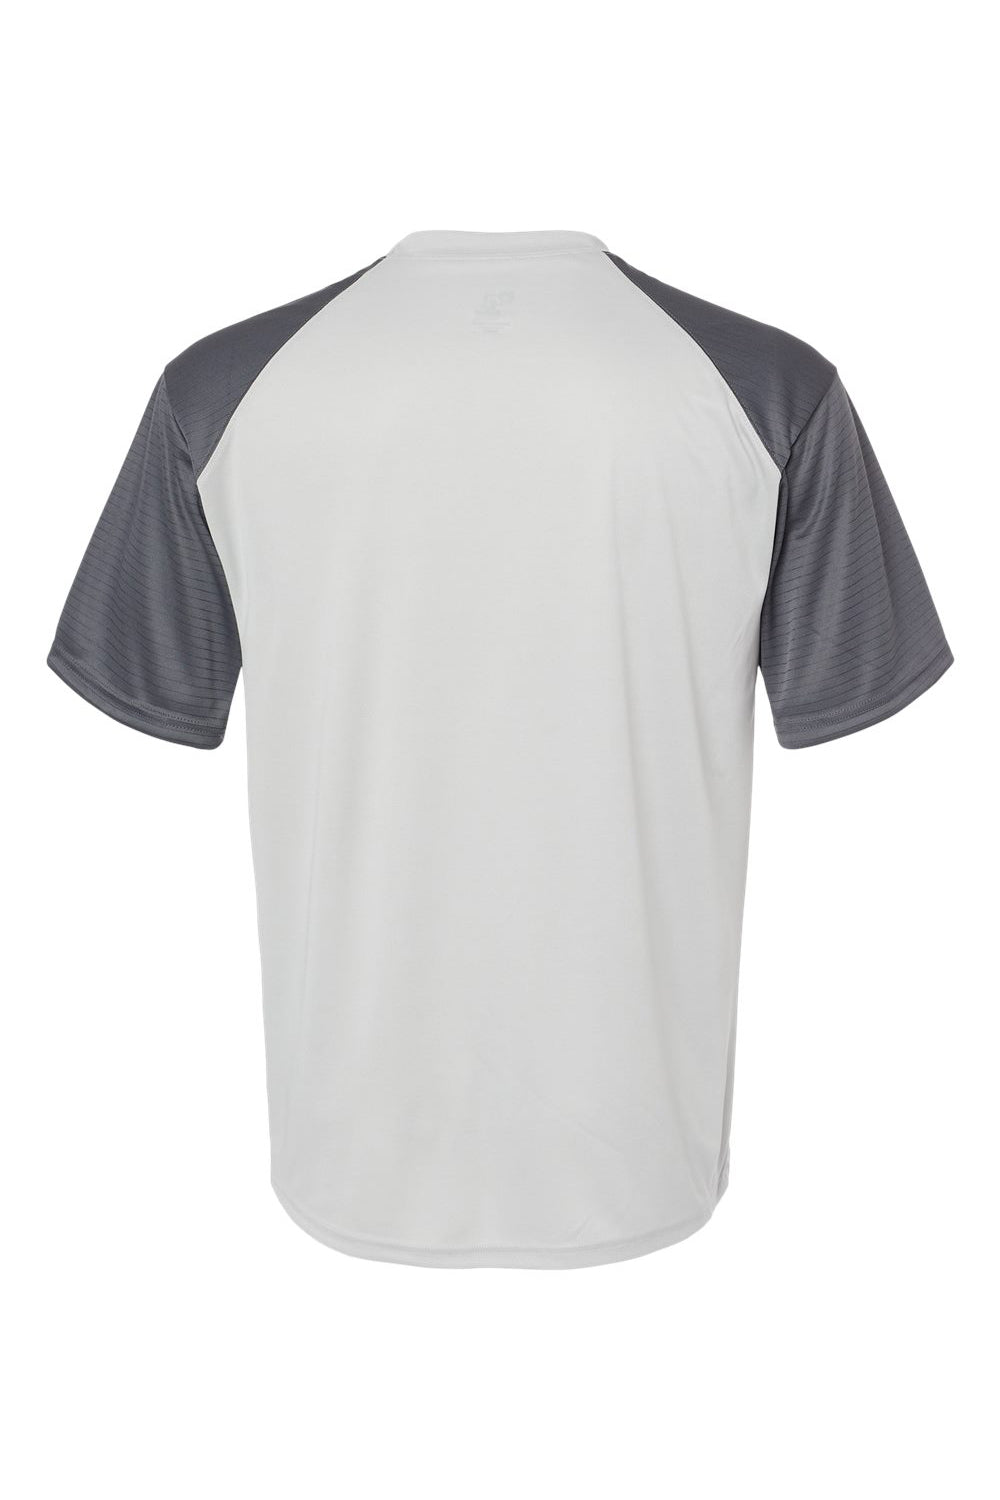 Badger 4230 Mens Breakout Moisture Wicking Short Sleeve Crewneck T-Shirt Silver Grey/Graphite Grey Flat Back